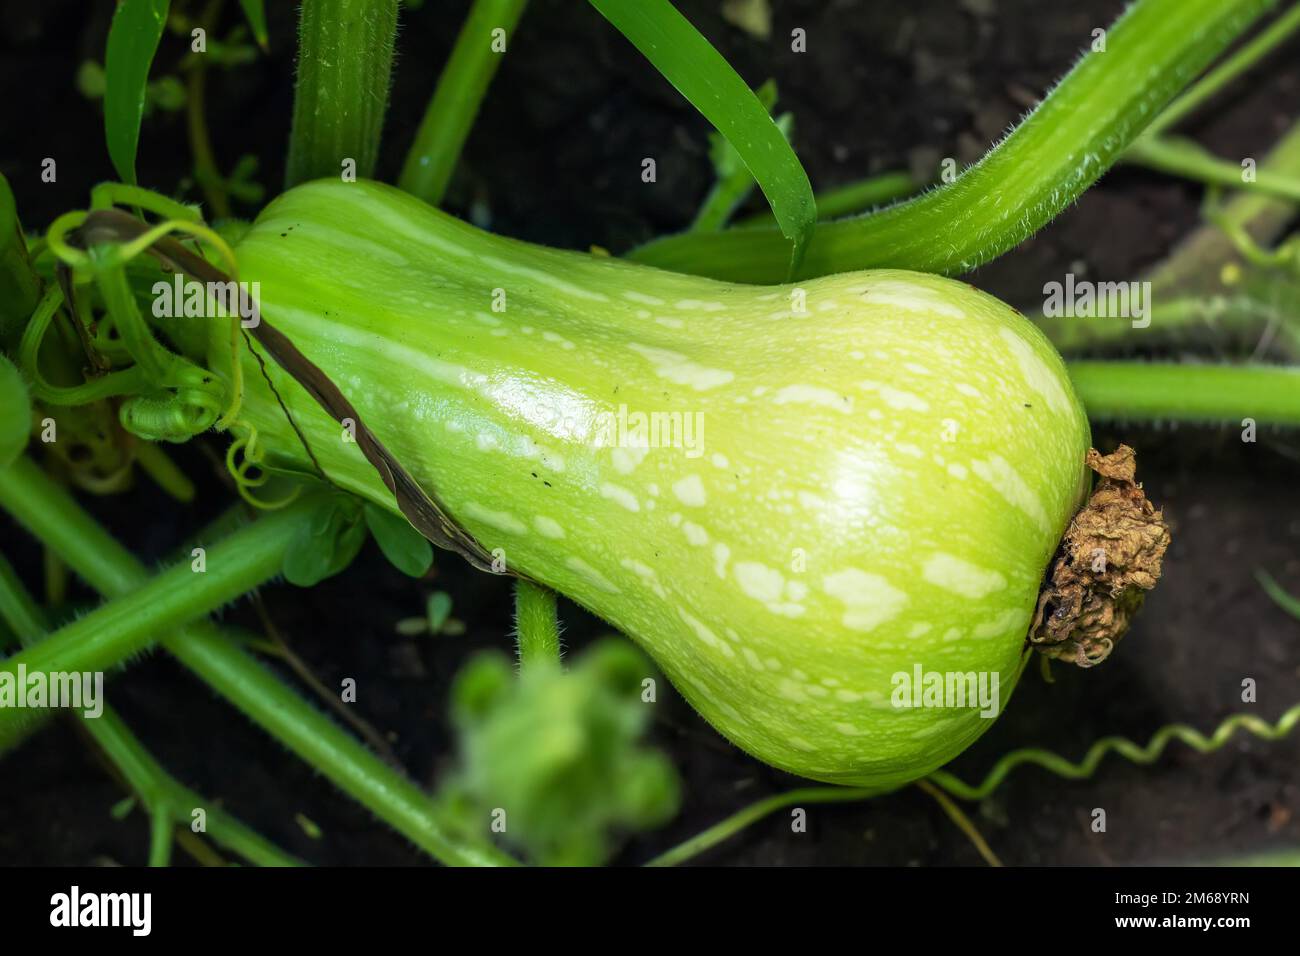 Zucchini plant. Zucchini flower. Green vegetable marrow growing on bush, Stock Photo